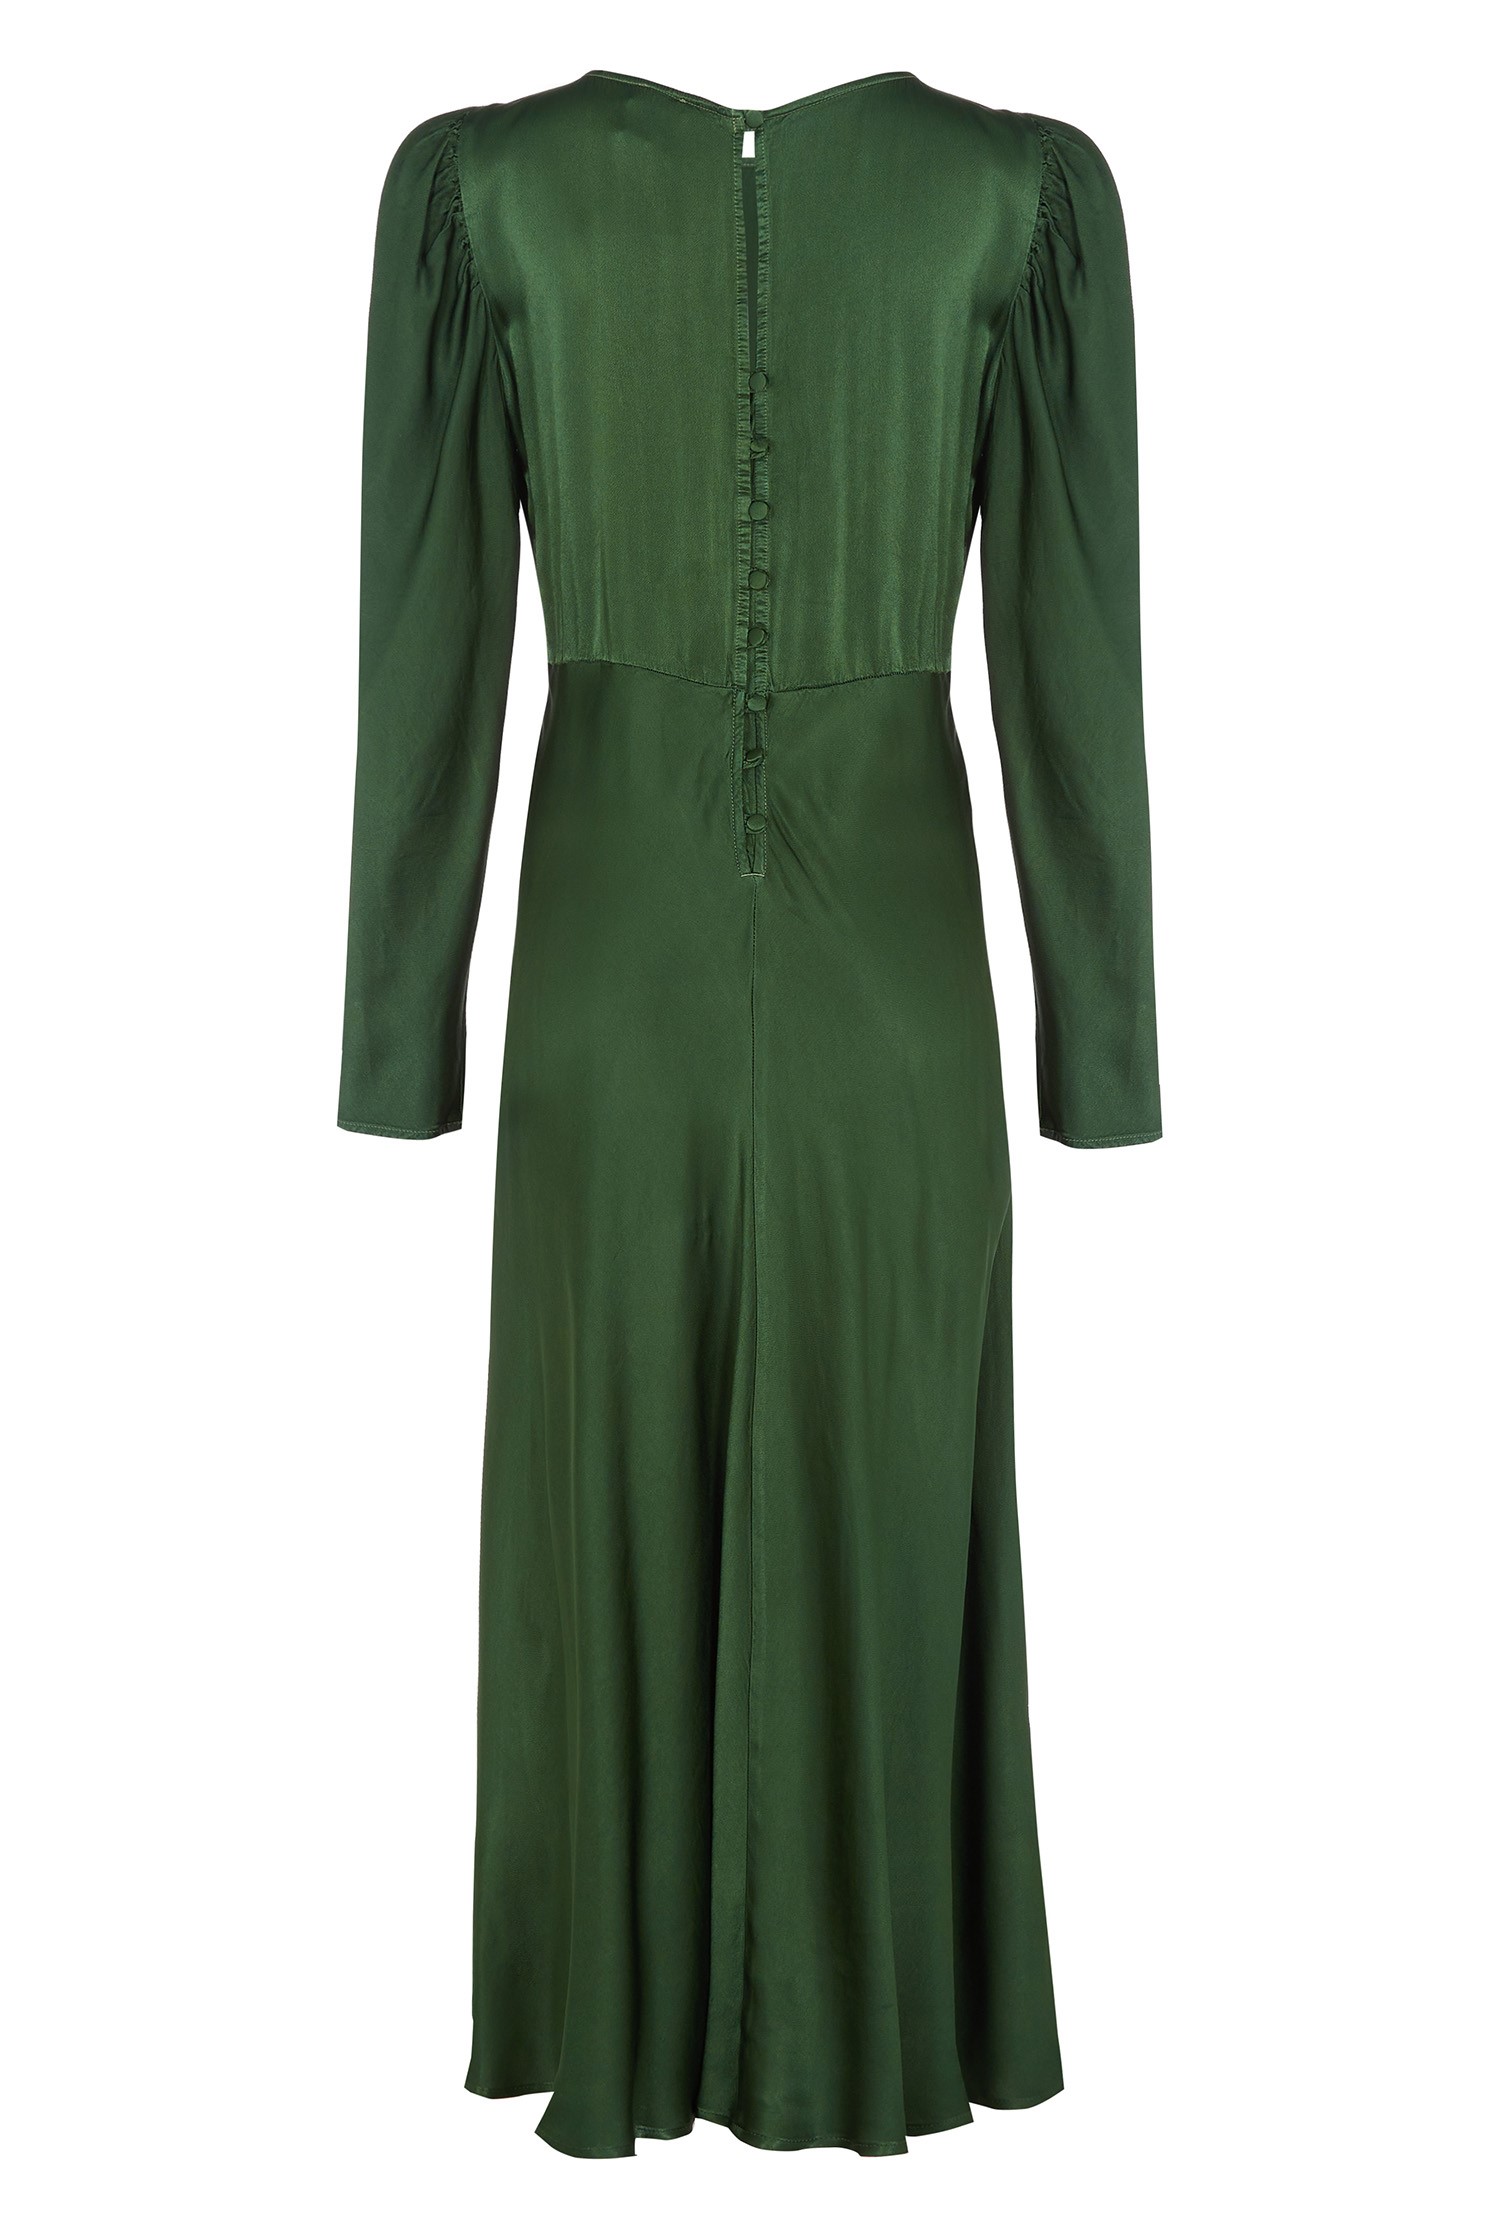 Rosaleen Dark Green Satin Dress | Ghost London